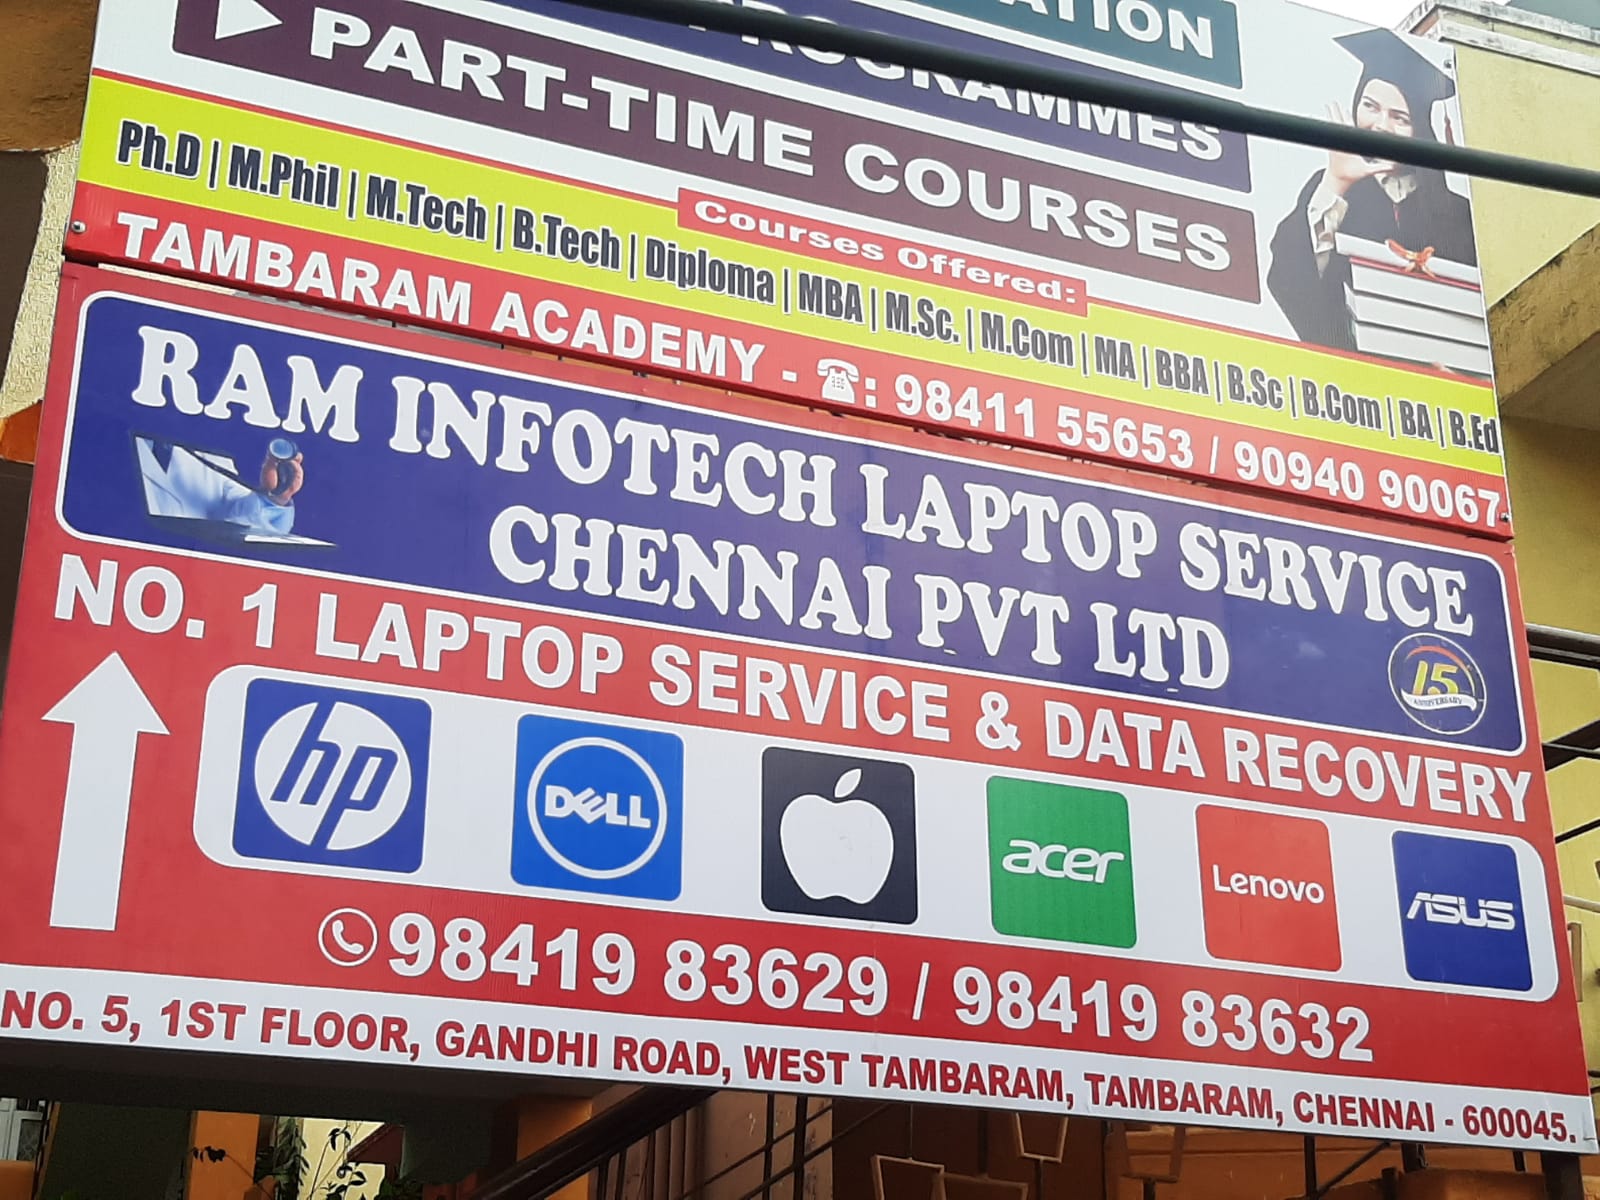 RAMINFOTECH LAPTOP SERVICE CENTER in Chennai